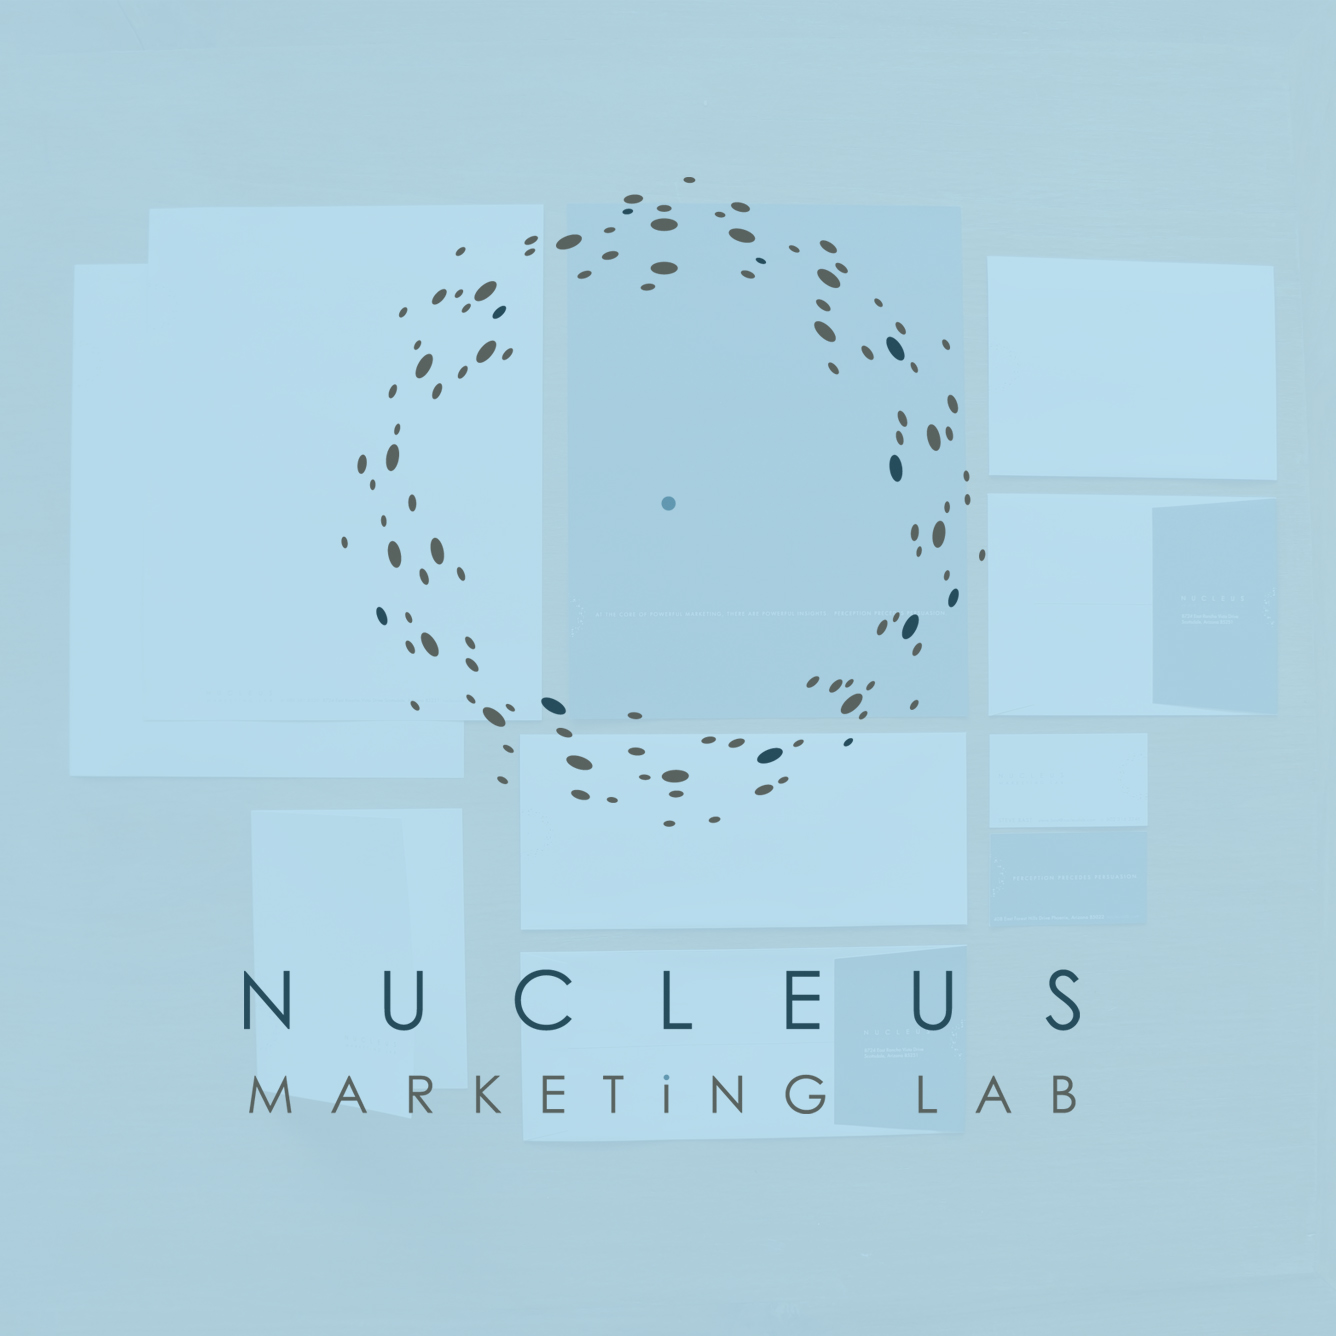 Sommerset Design - Nucleus Marketing Lab